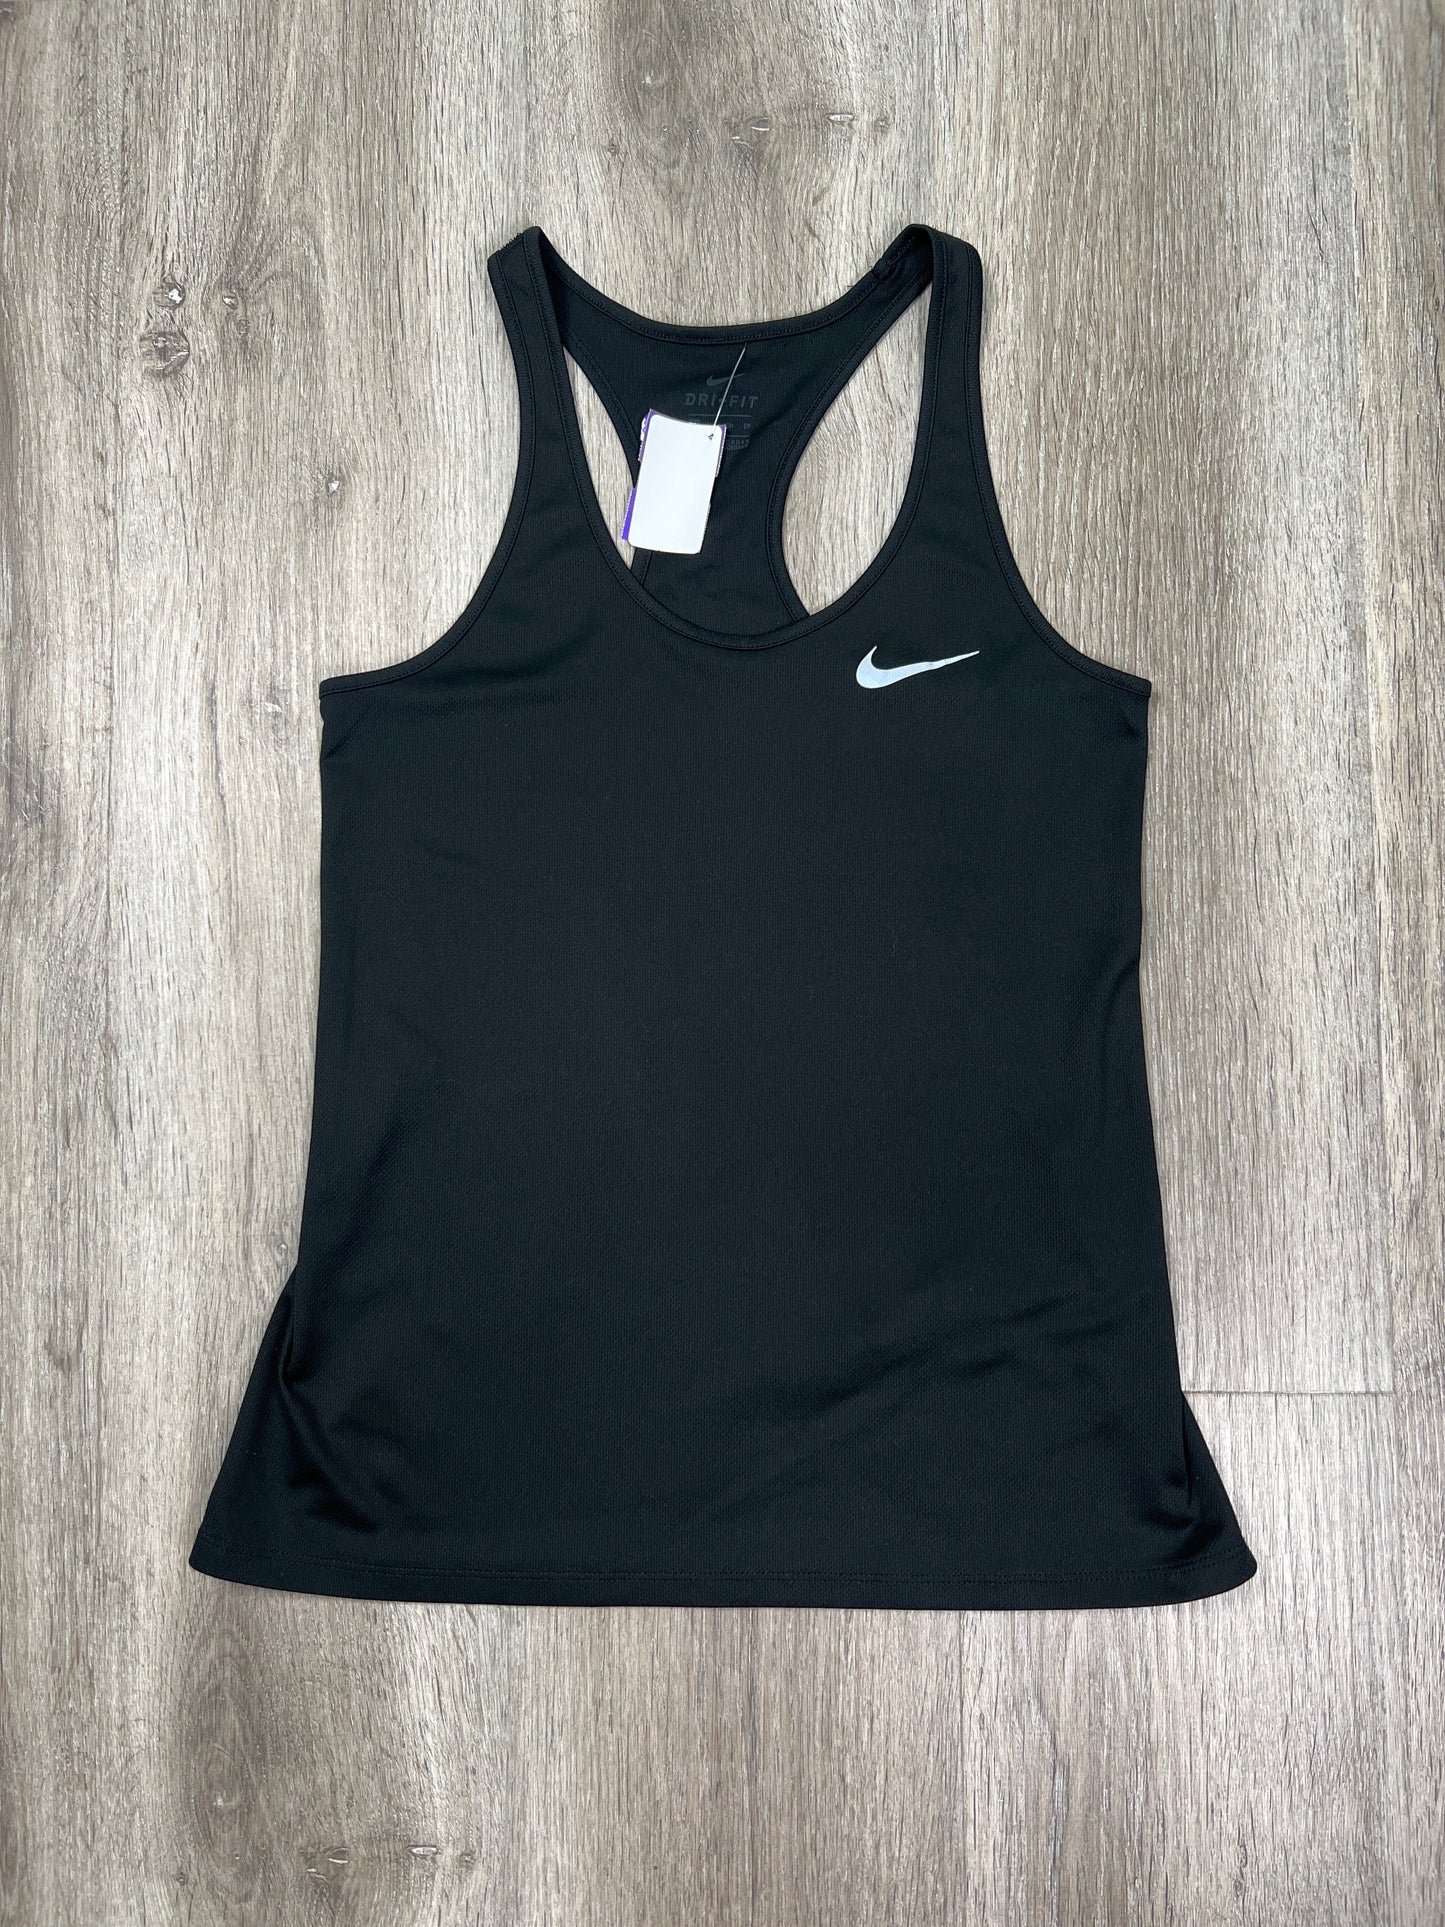 Black Athletic Tank Top Nike Apparel, Size Xs